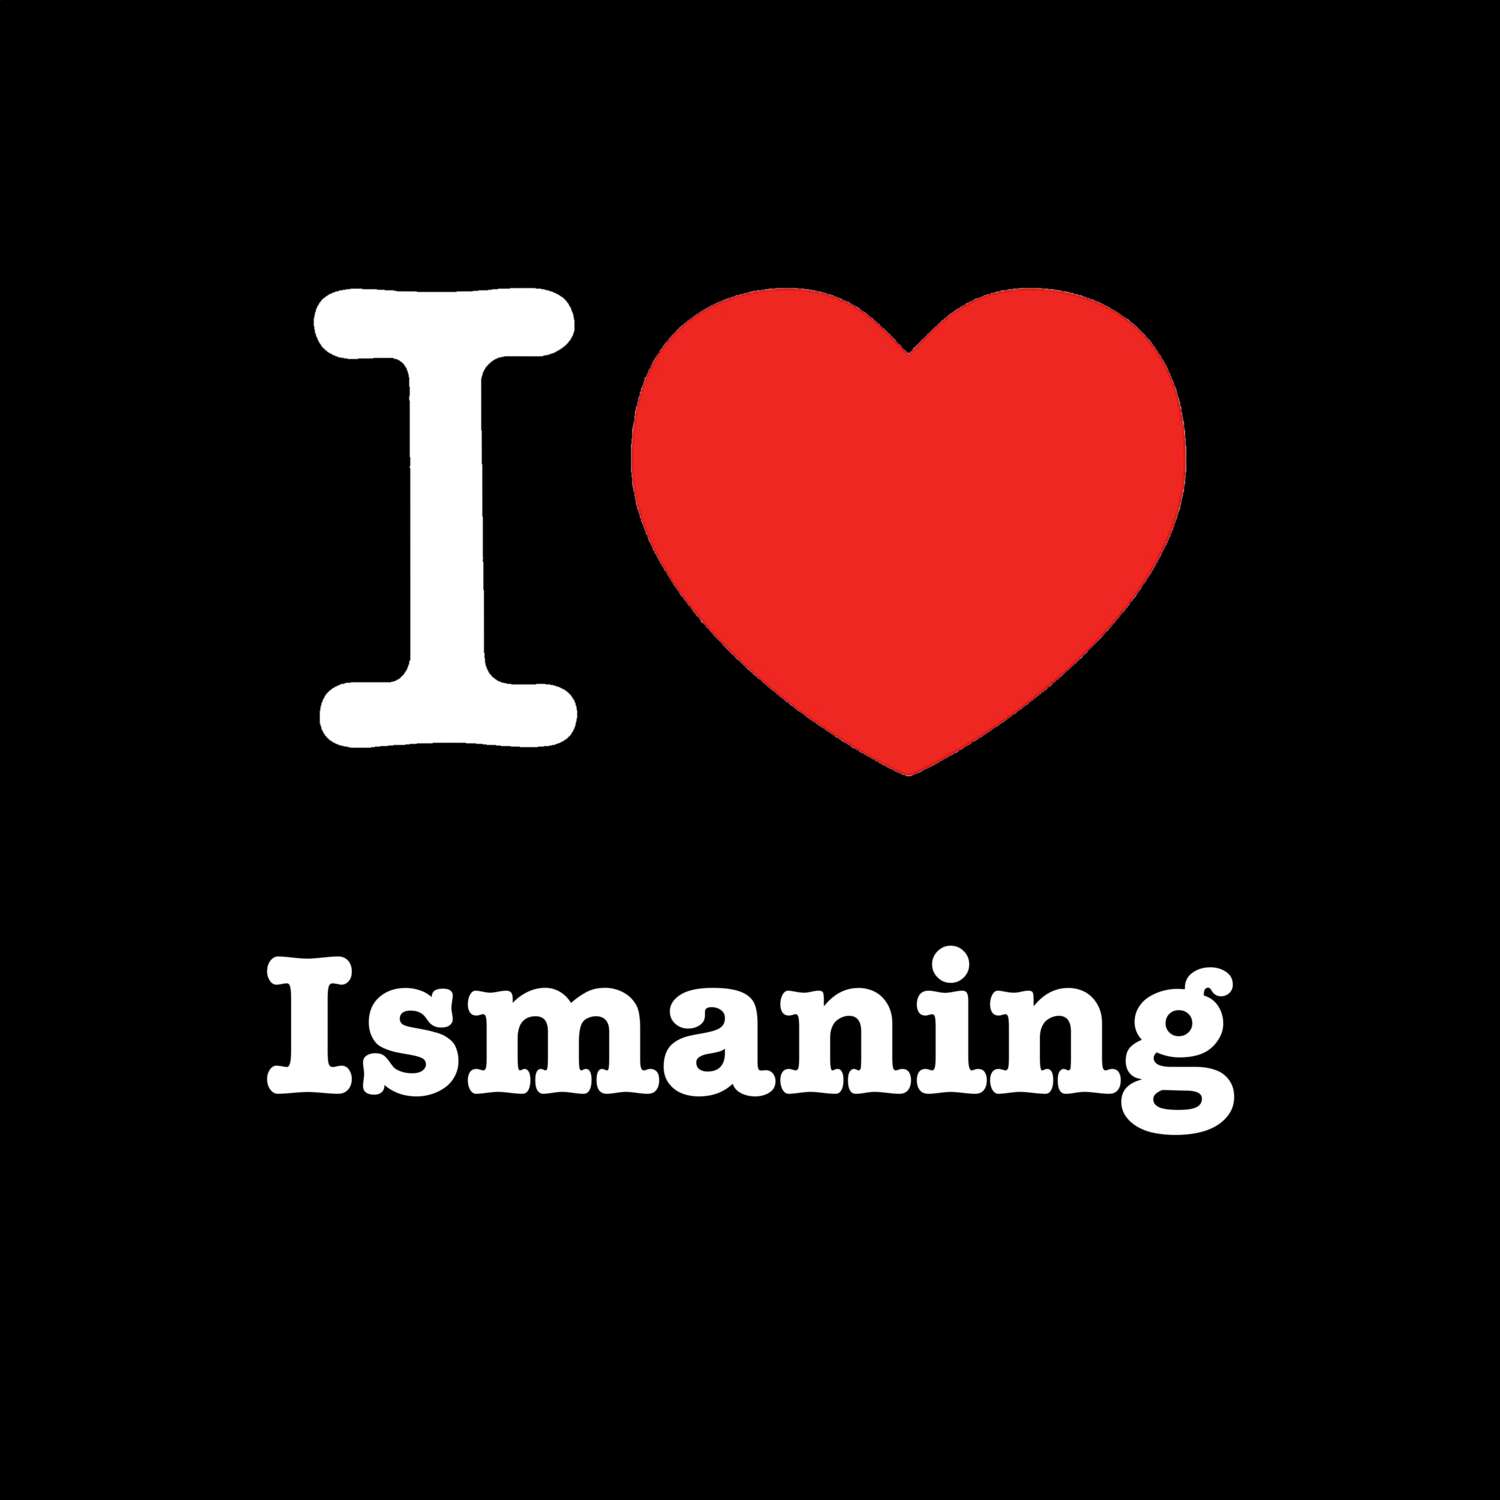 Ismaning T-Shirt »I love«